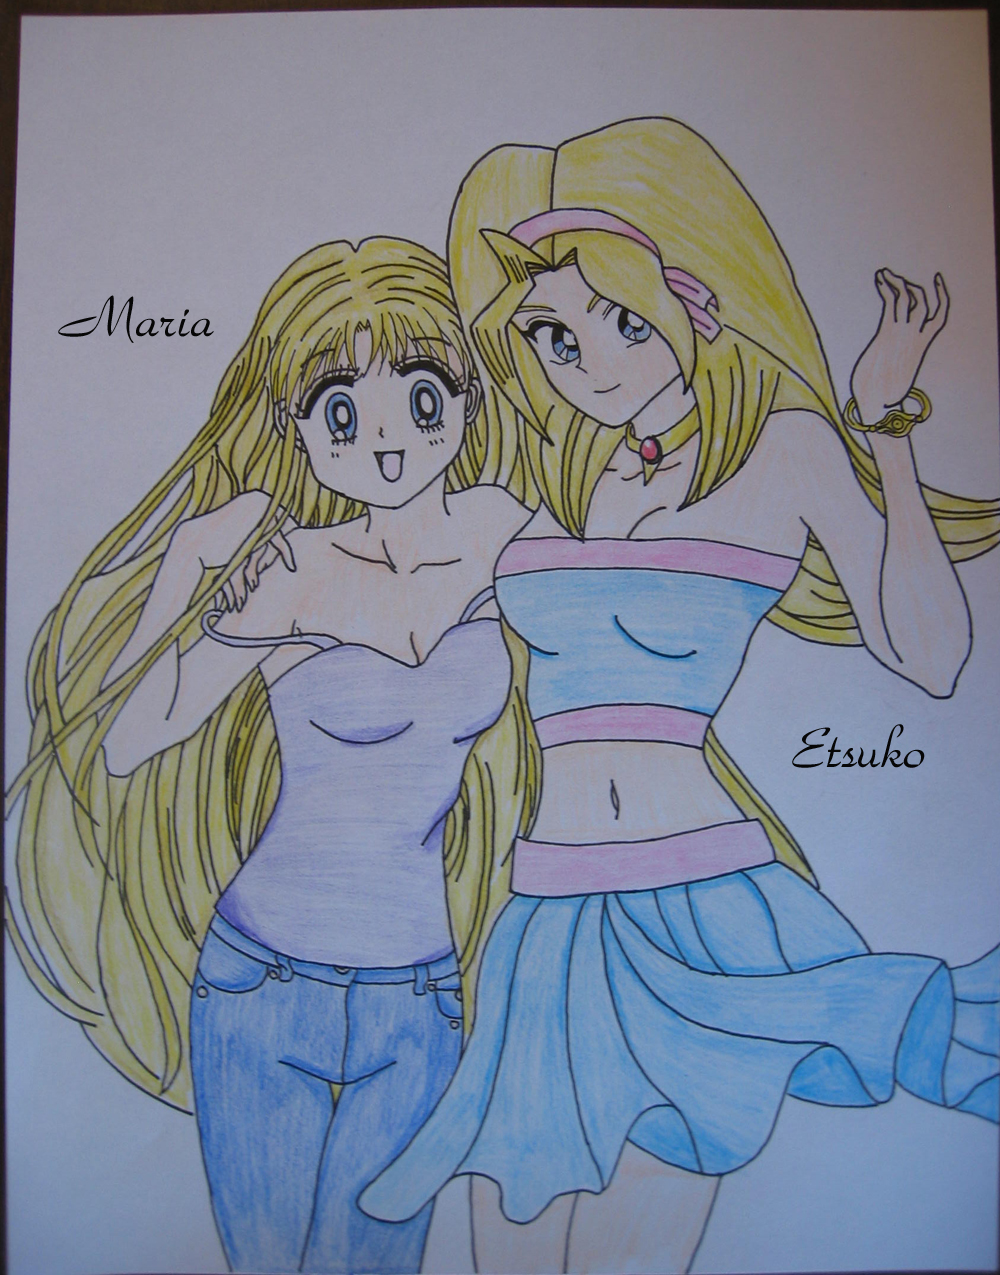 Maria and Etsuko by Shadowlover8